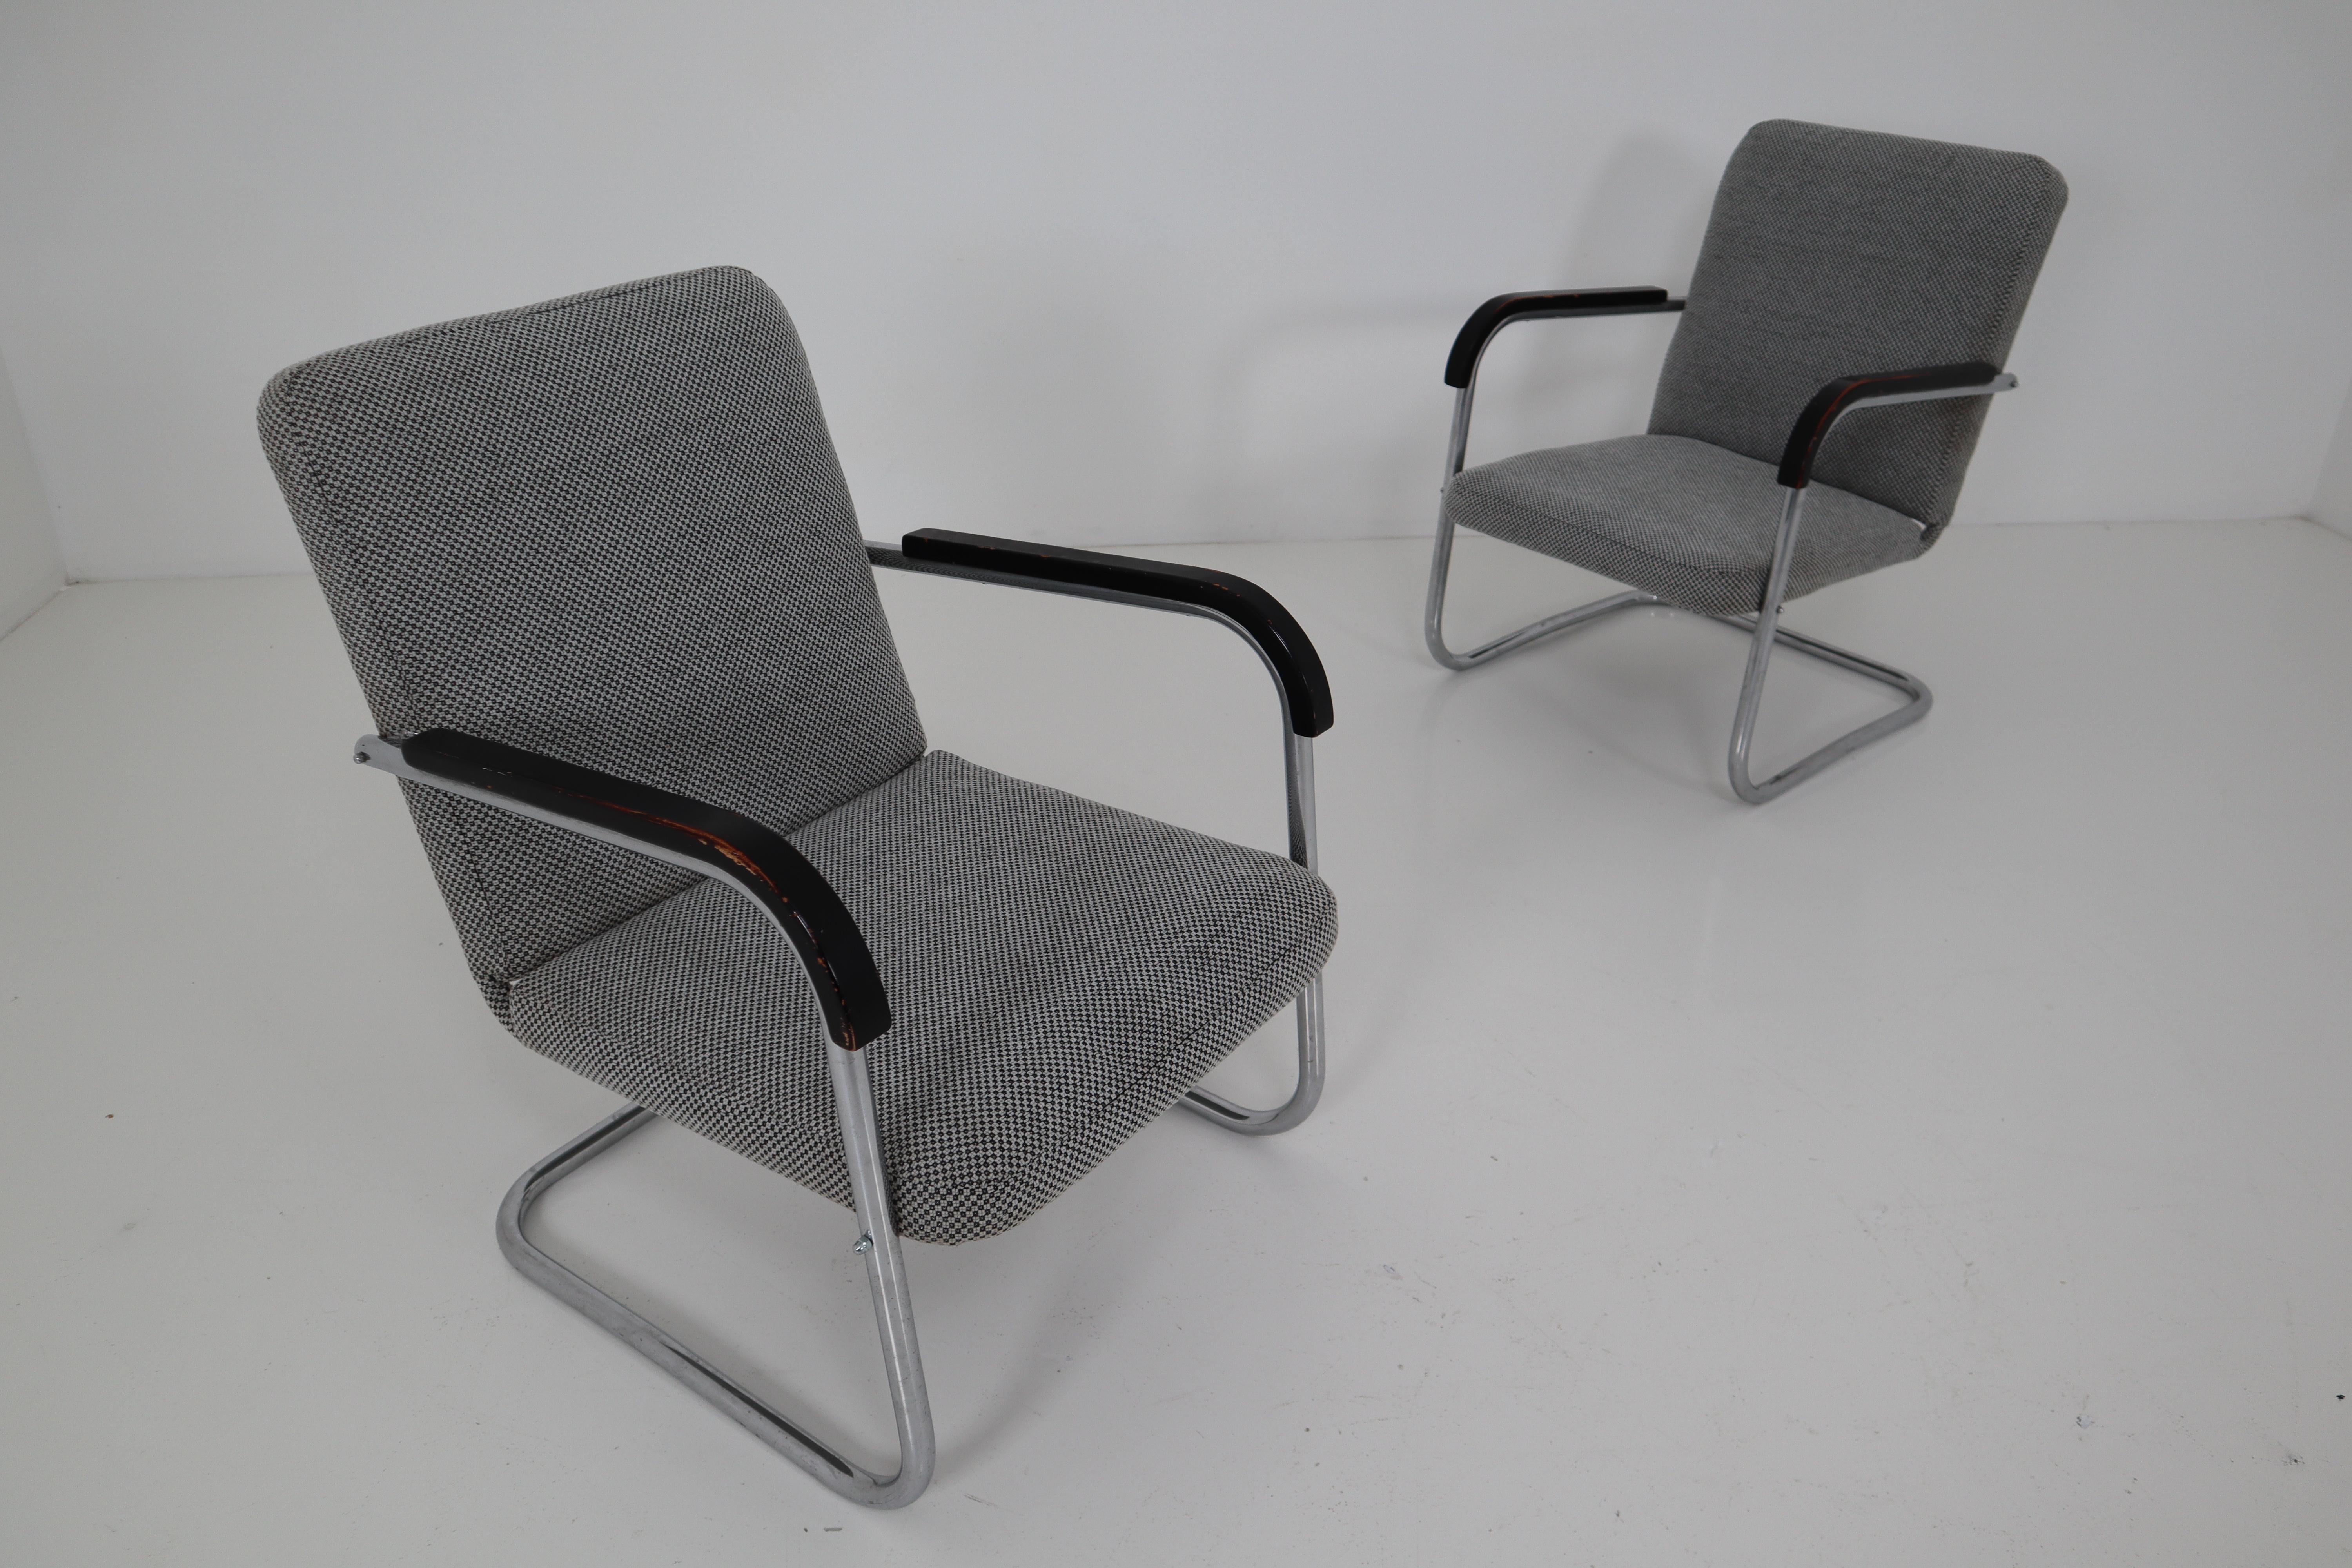 Pair of Chrome Steel Armchairs by Thonet circa 1930s Midcentury Bauhaus Period 1